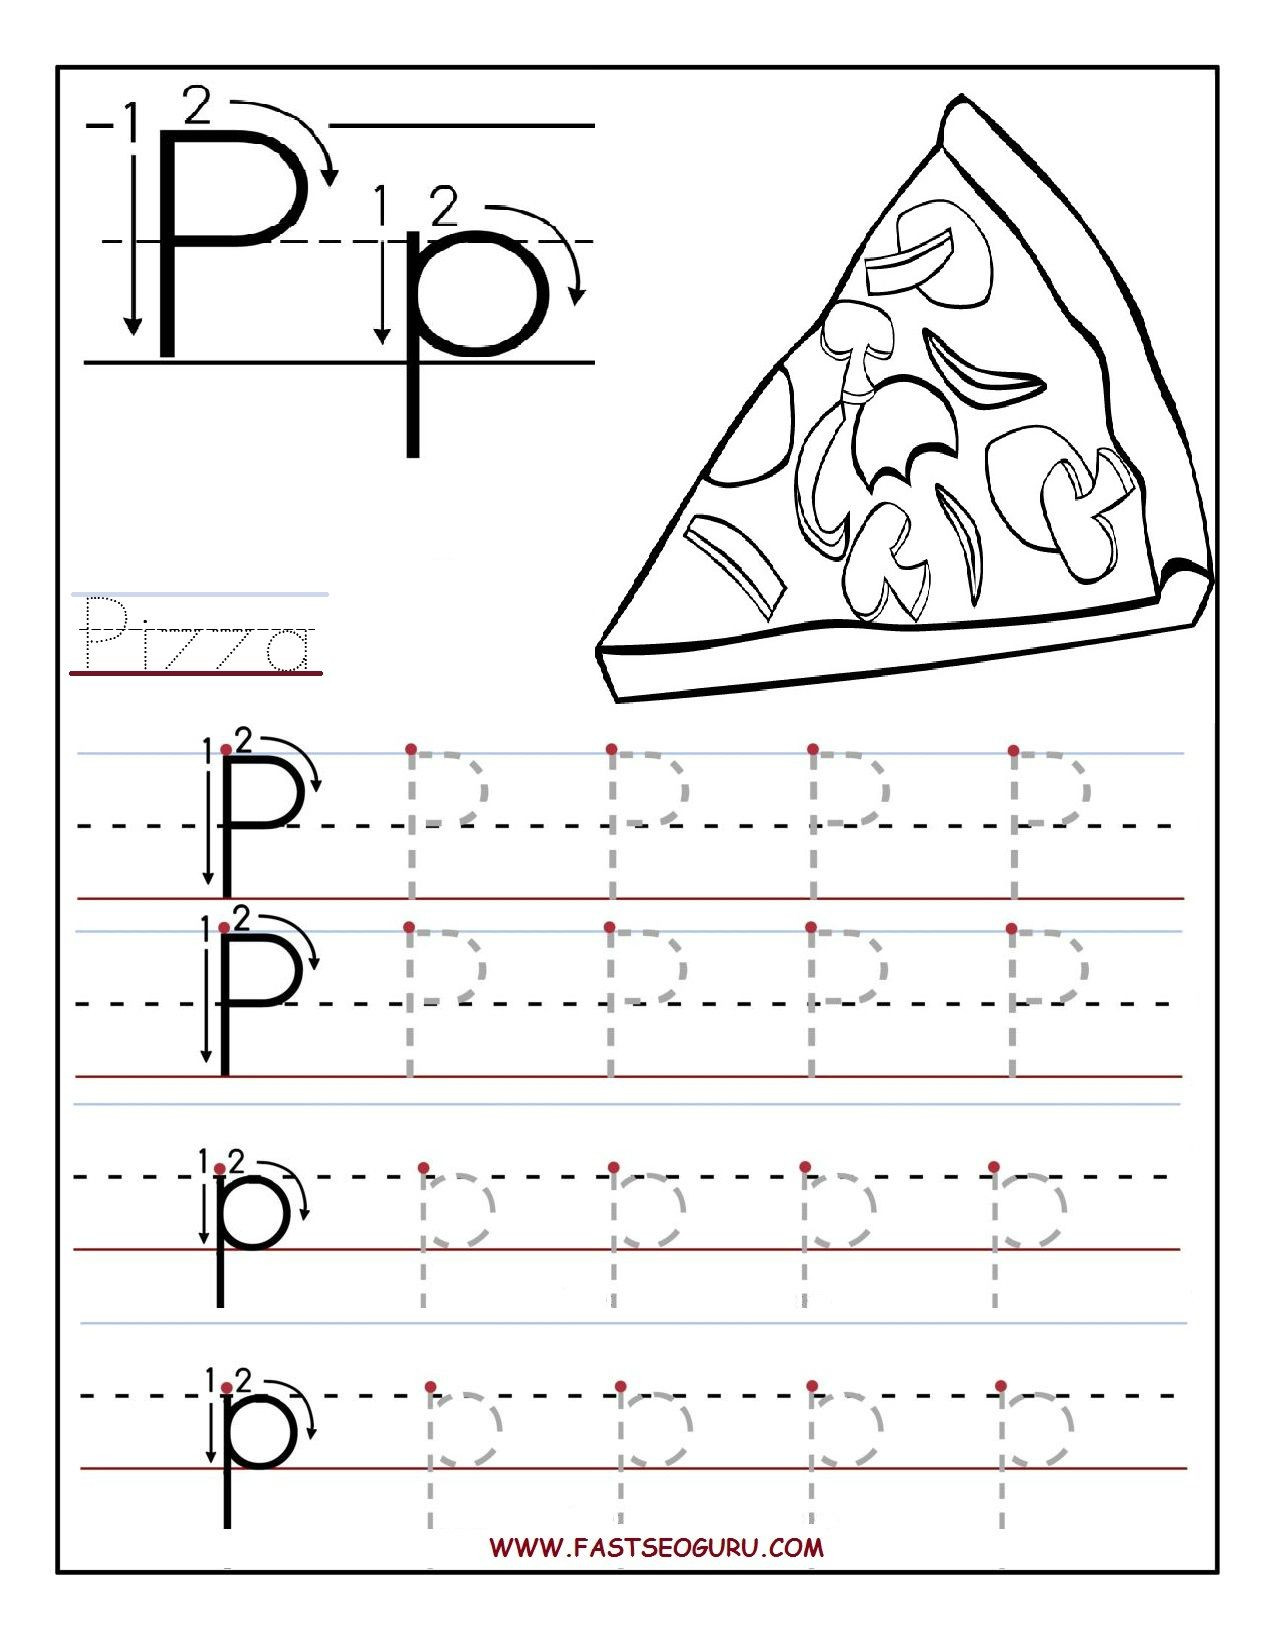 Letter P Worksheets Preschool Printable Letter P Tracing Worksheets for Preschool